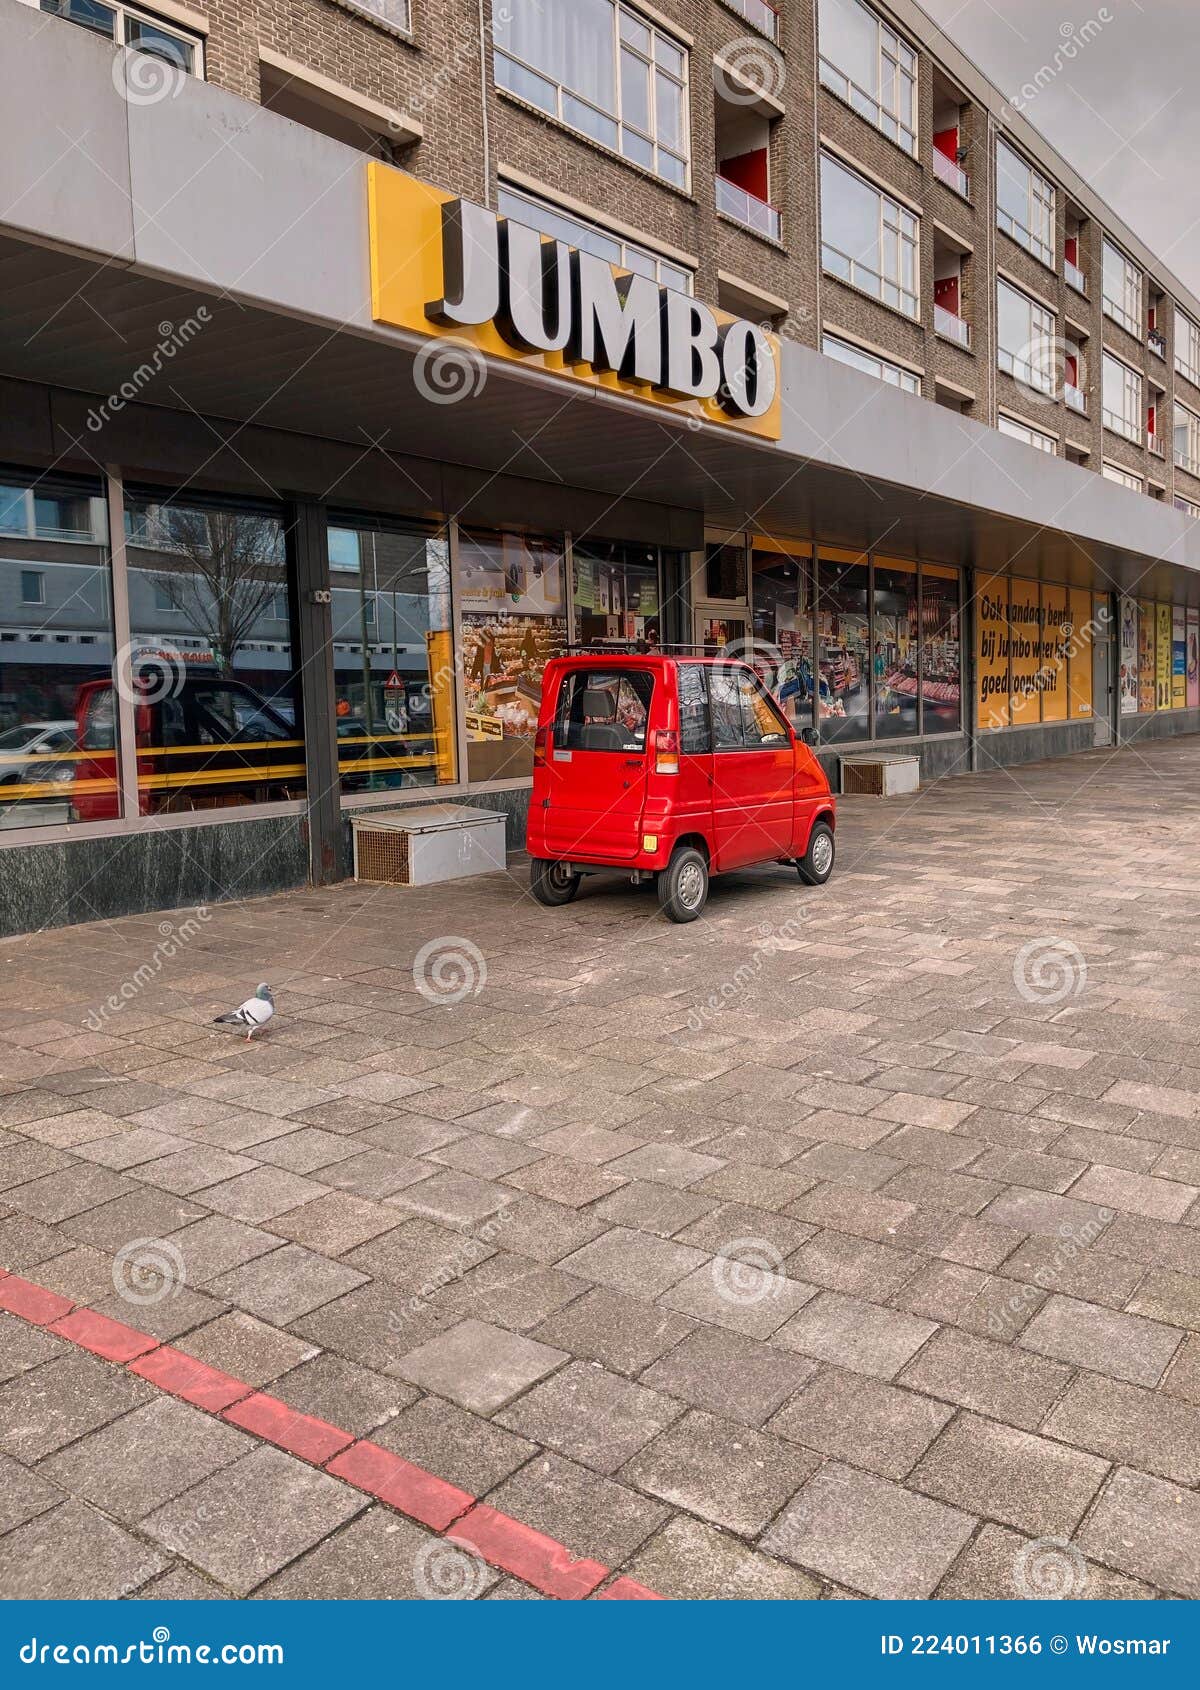 JUMBO SUPERMARKET IN THE NETHERLANDS